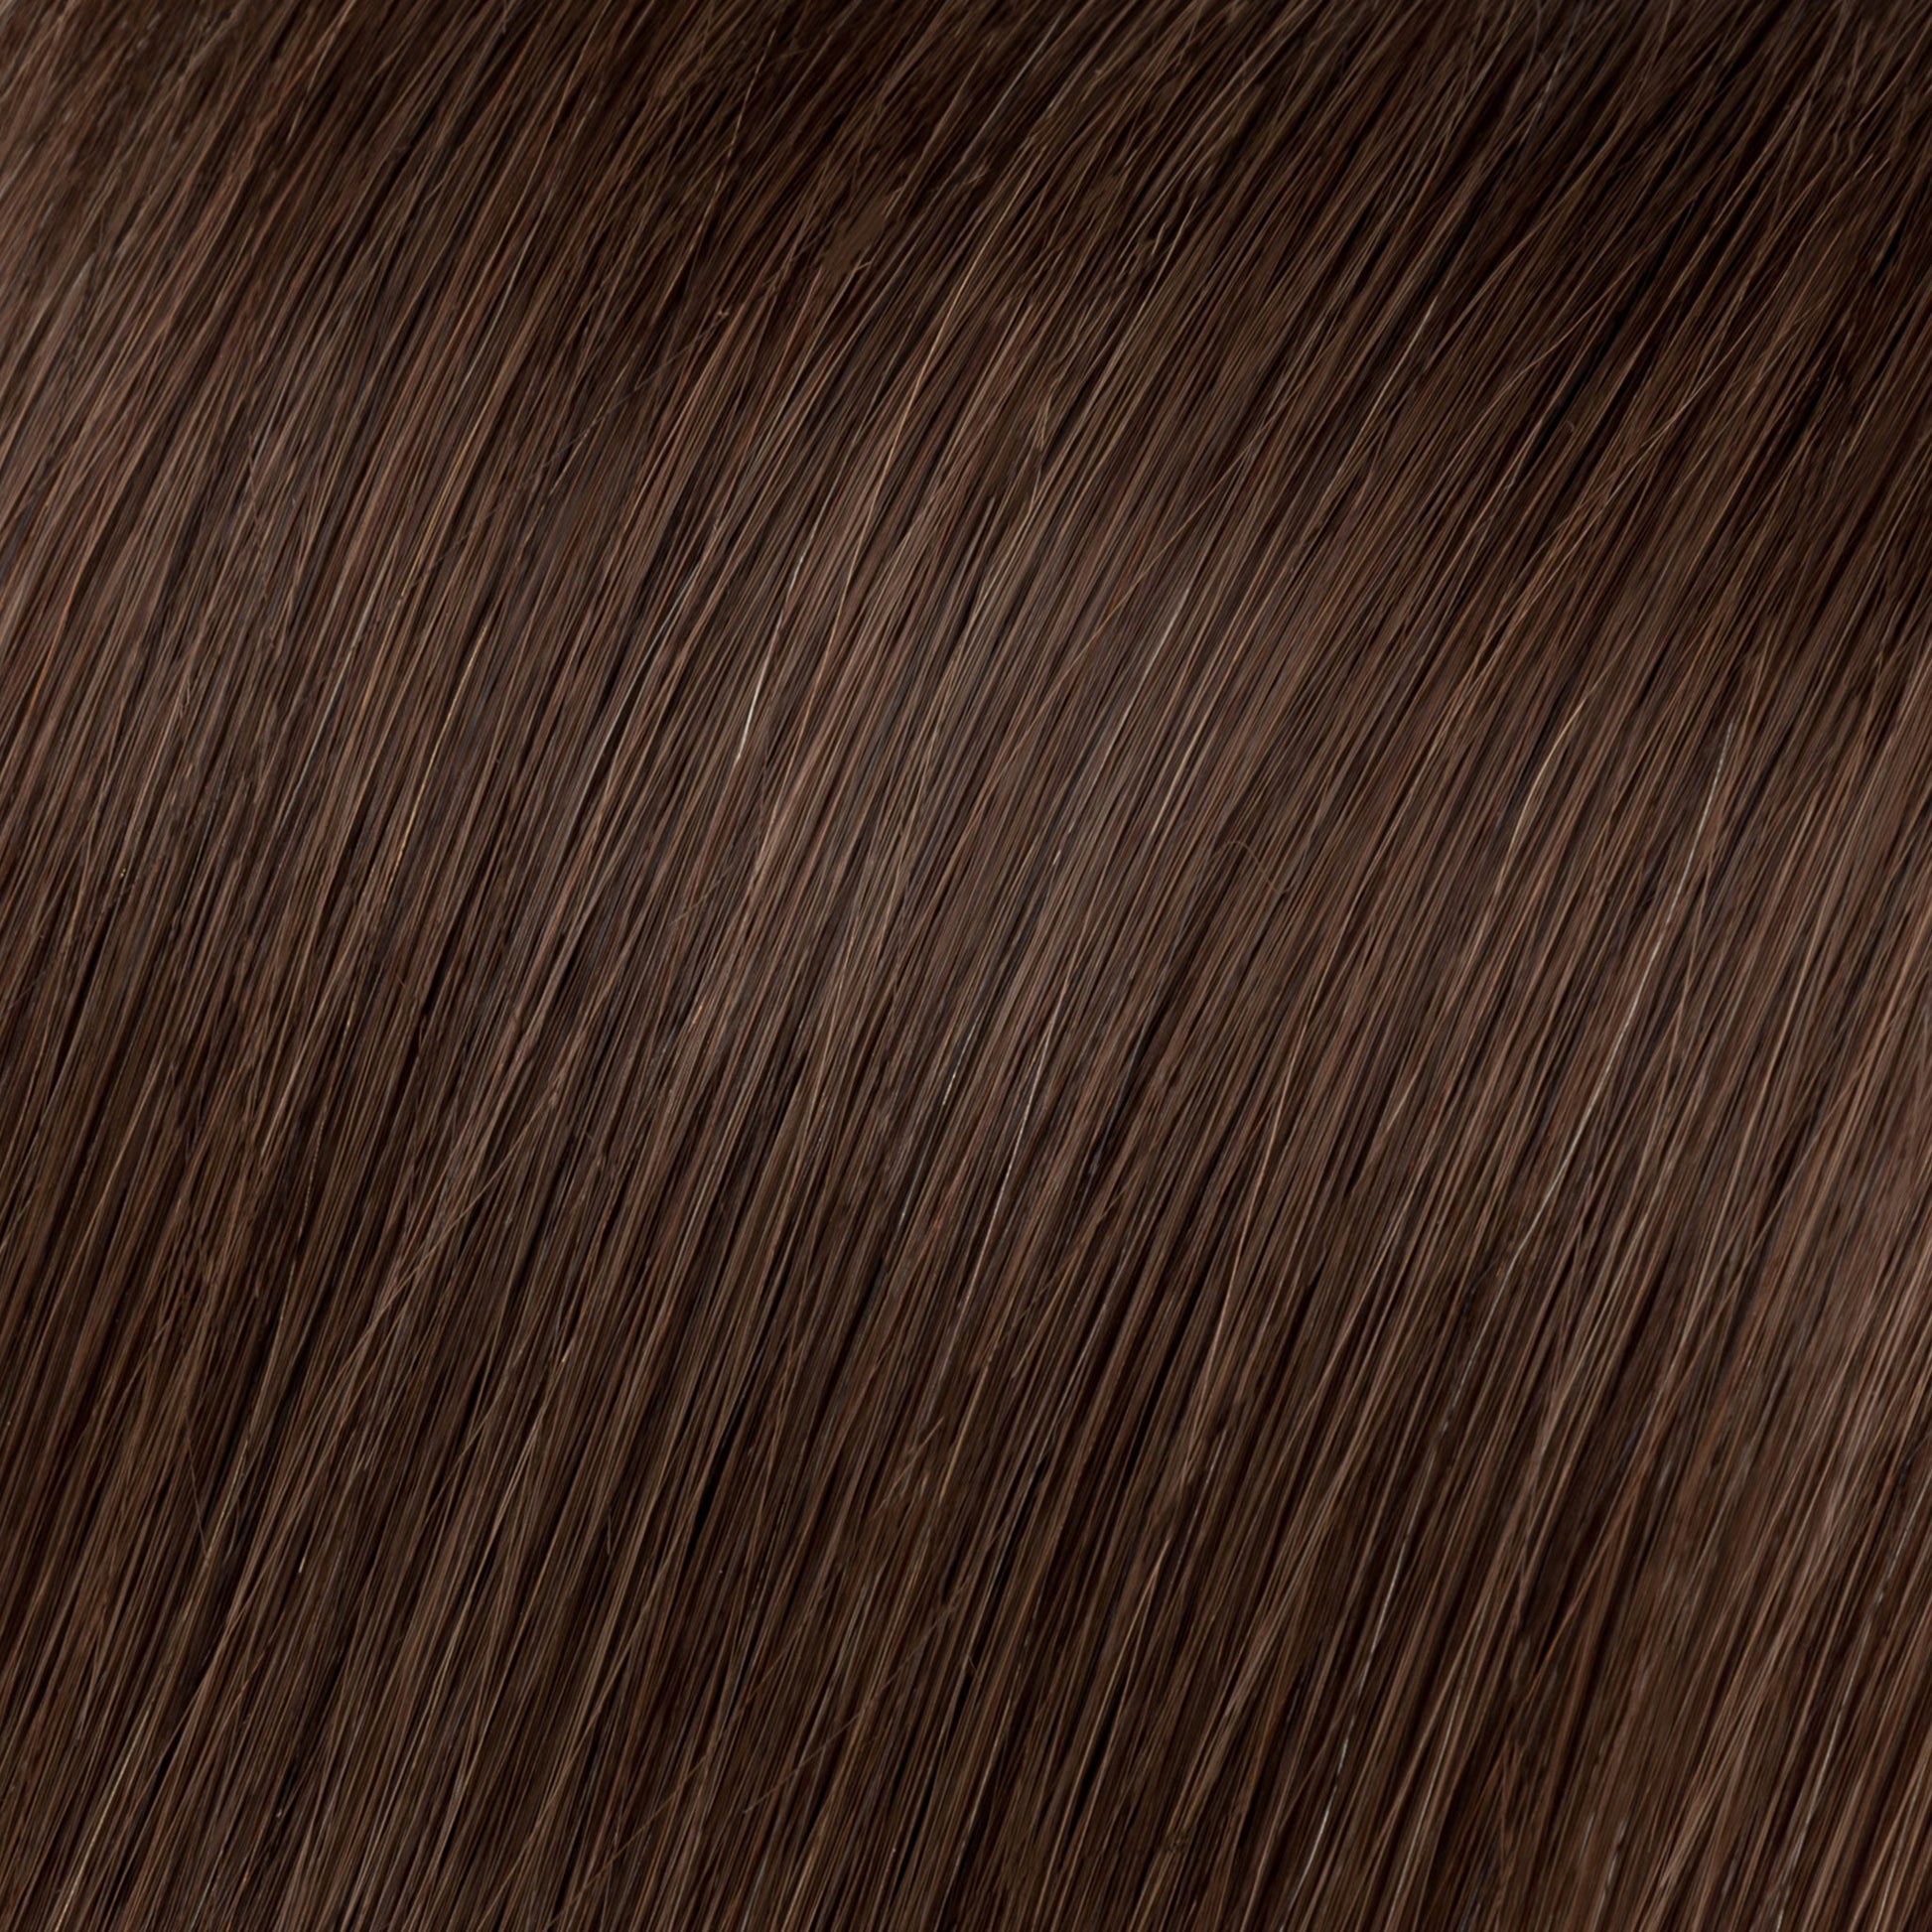 Medium Brown Thinning Hair Fill-Ins segohair.com